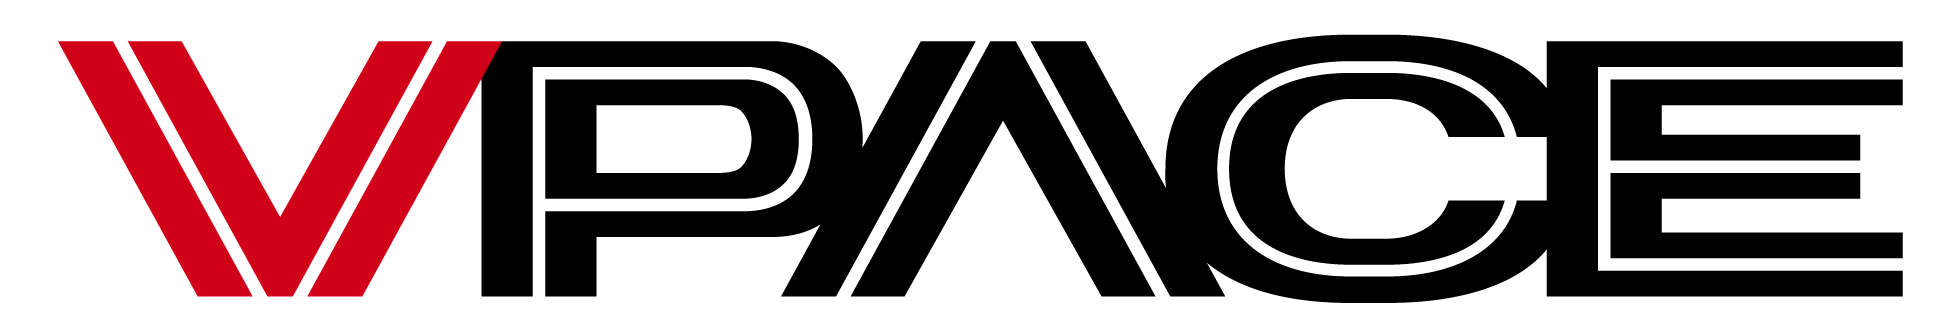 VPACE Logo redV